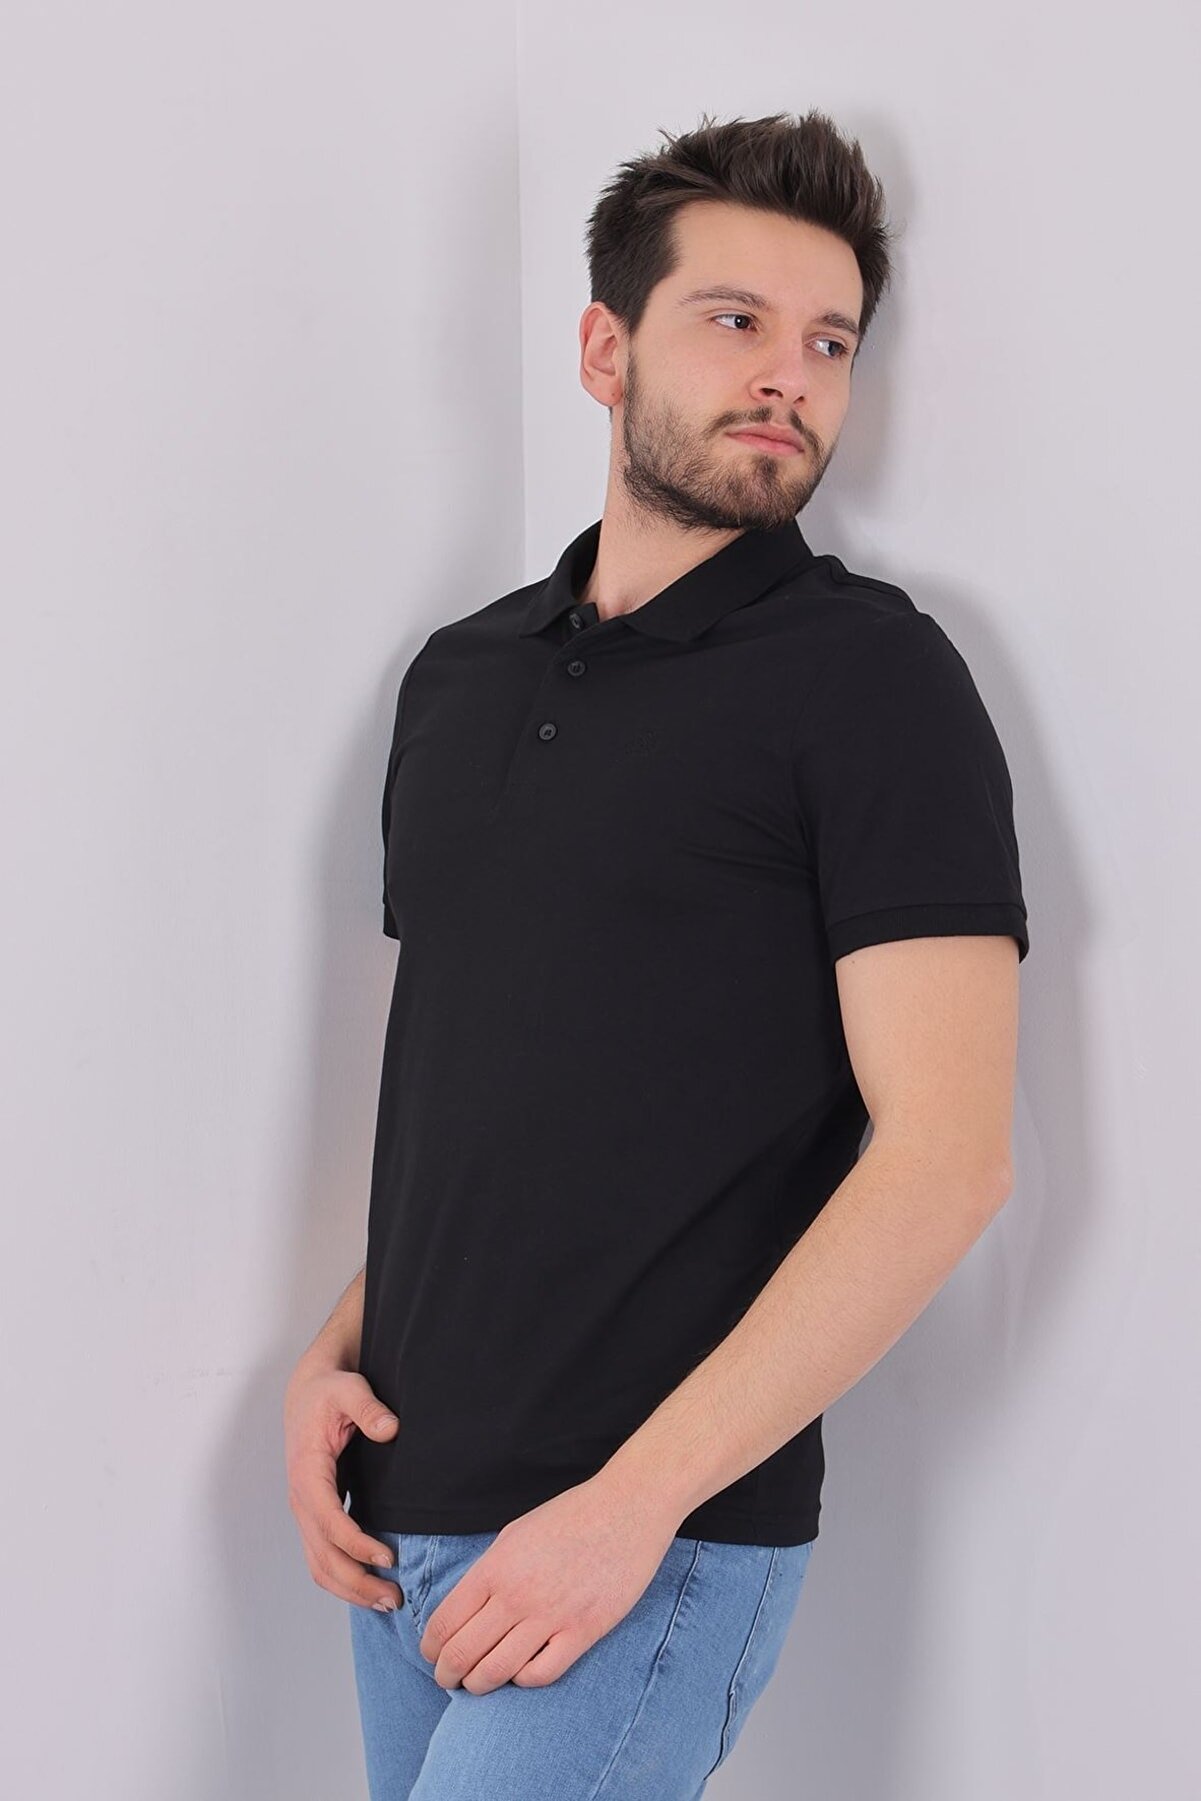 GİYSA Erkek Siyah Likralı Polo Yaka T-shirt 2061-4613